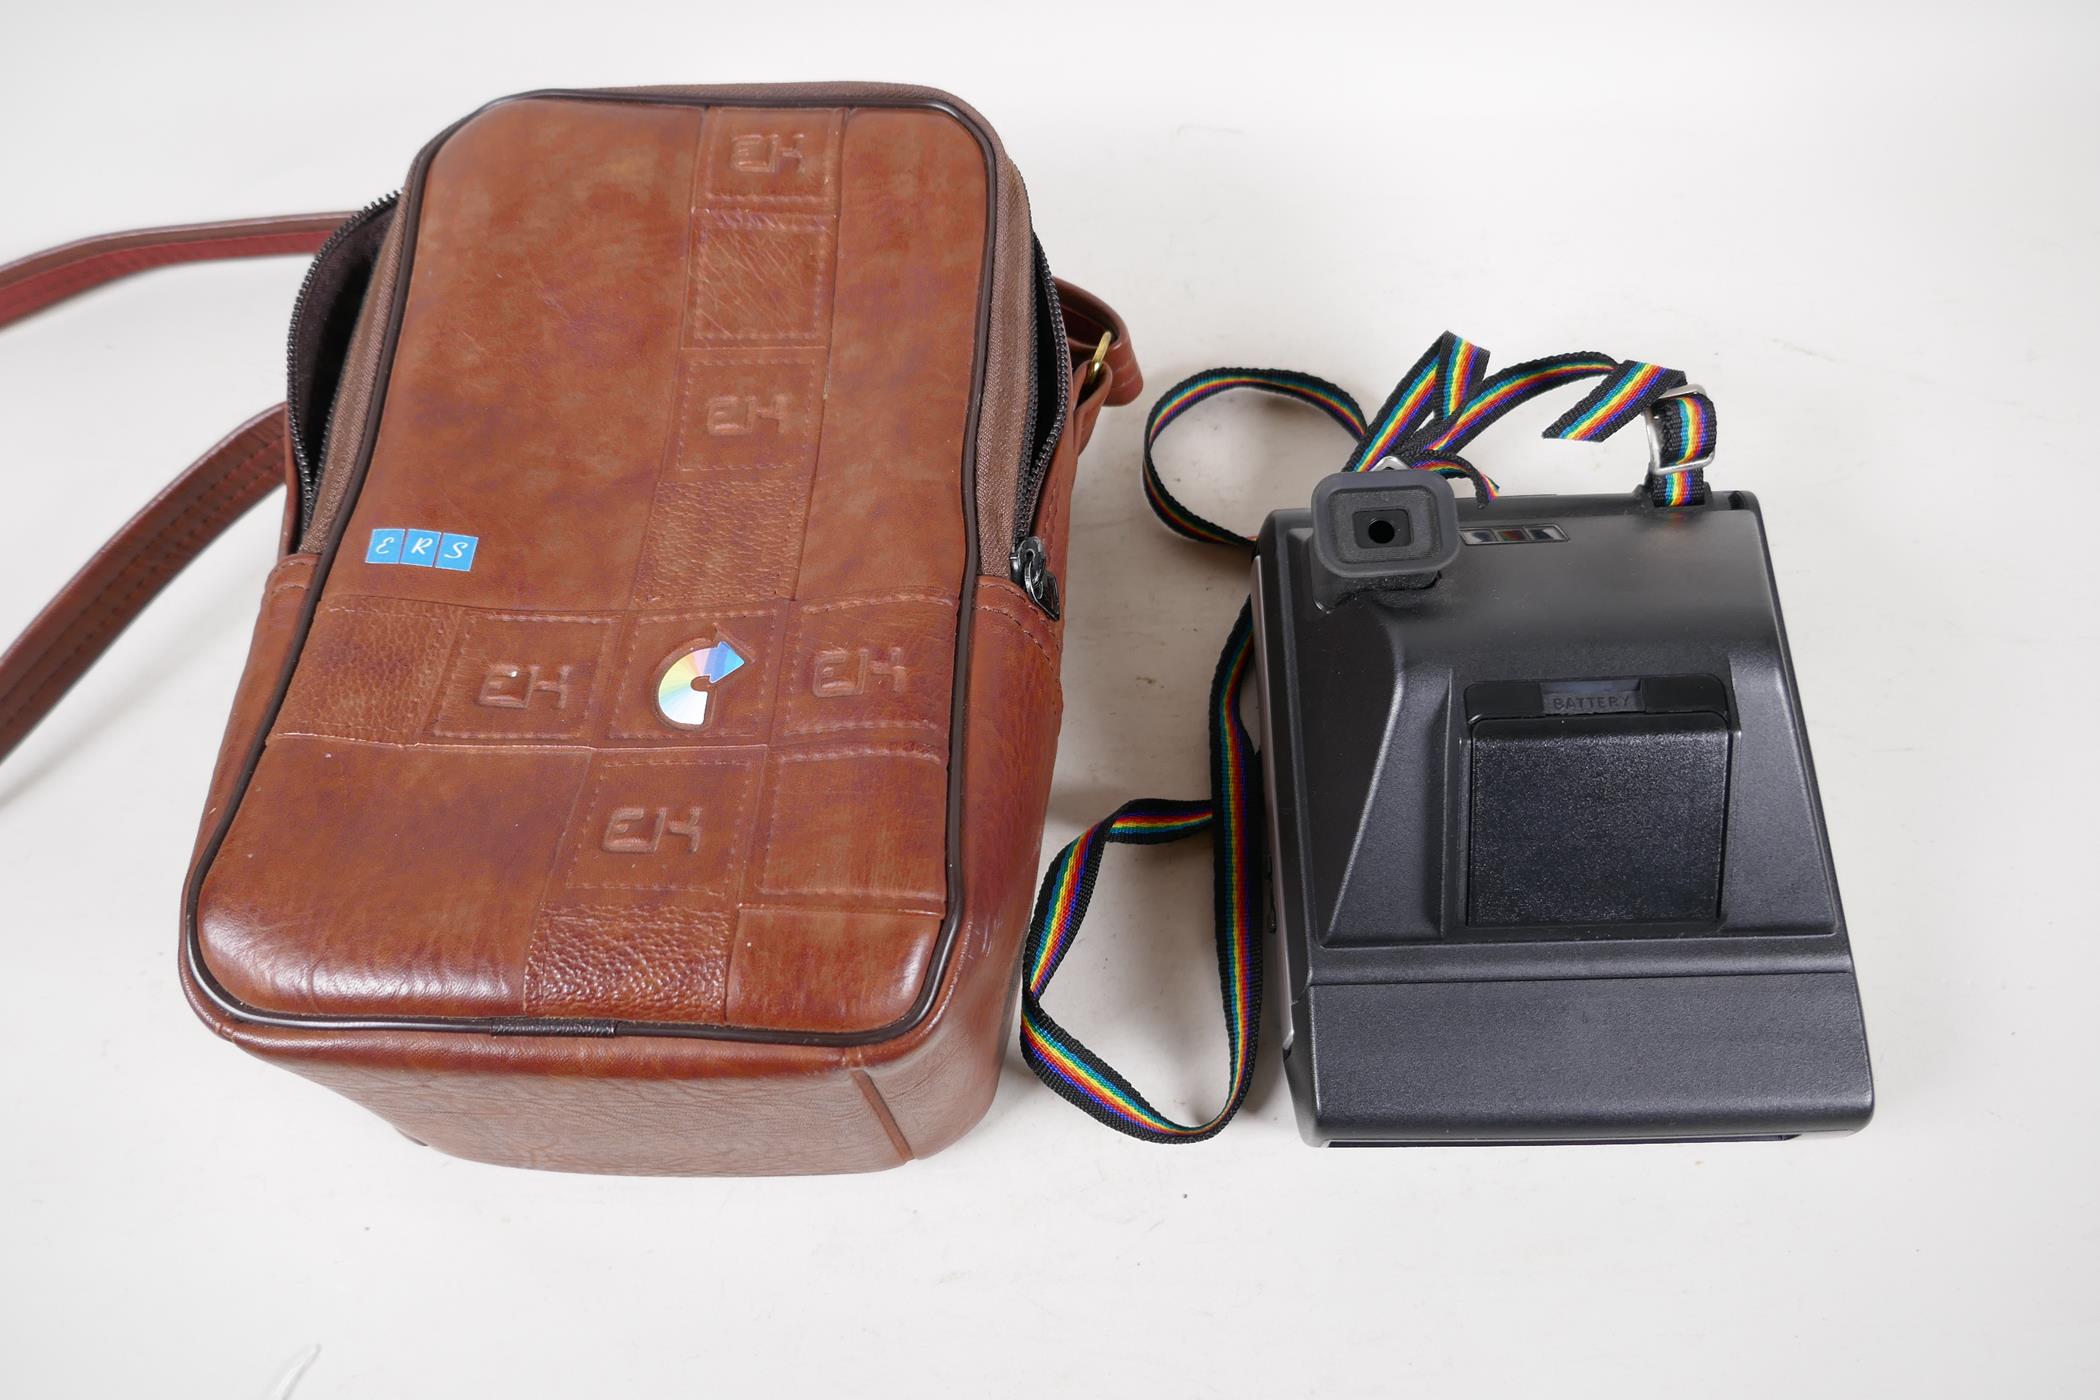 A Kodak Colourburst instant camera in original leather case